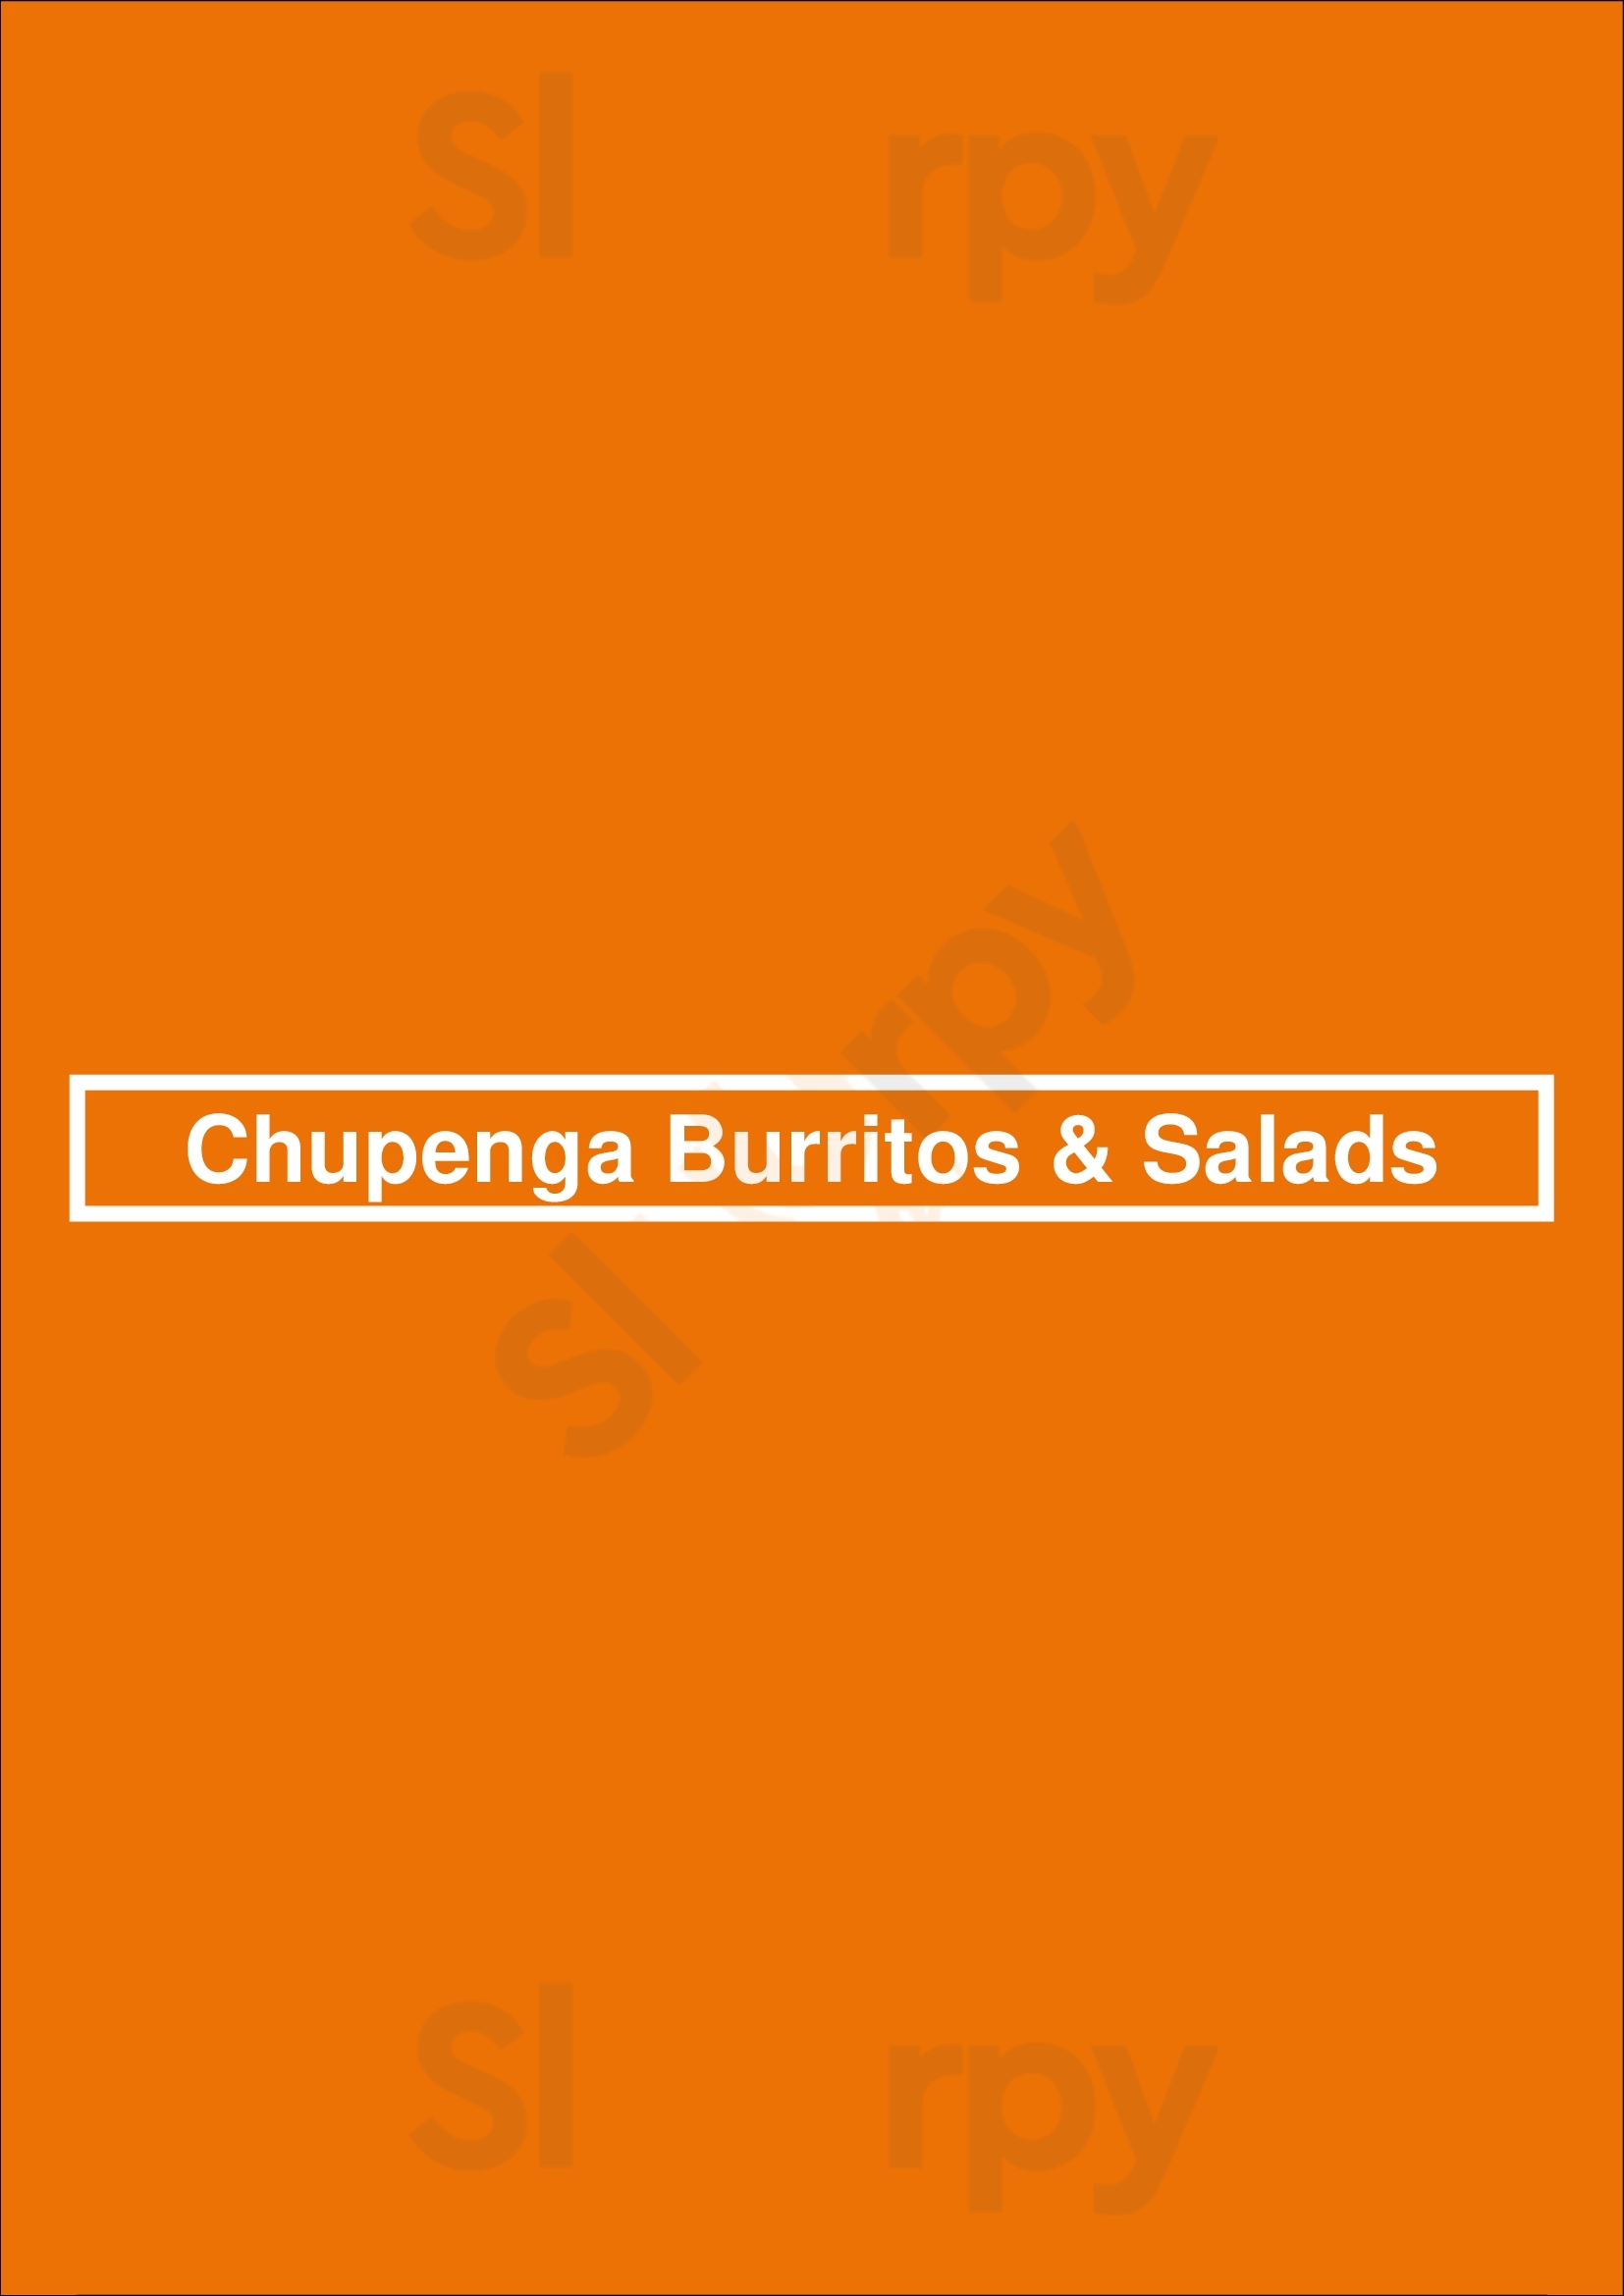 Chupenga Burritos & Salads Berlin Menu - 1